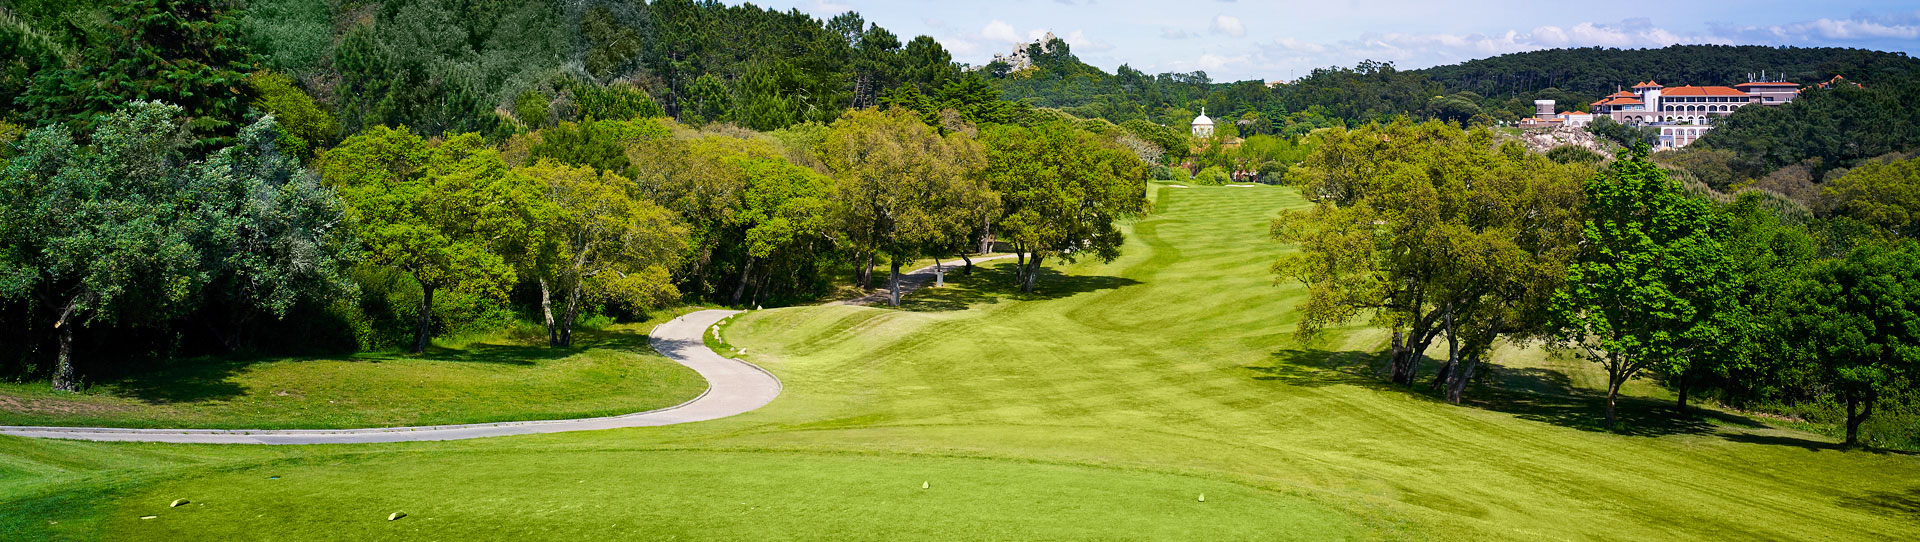 Portugal golf courses - Penha Longa Atlantic Championship - Photo 2